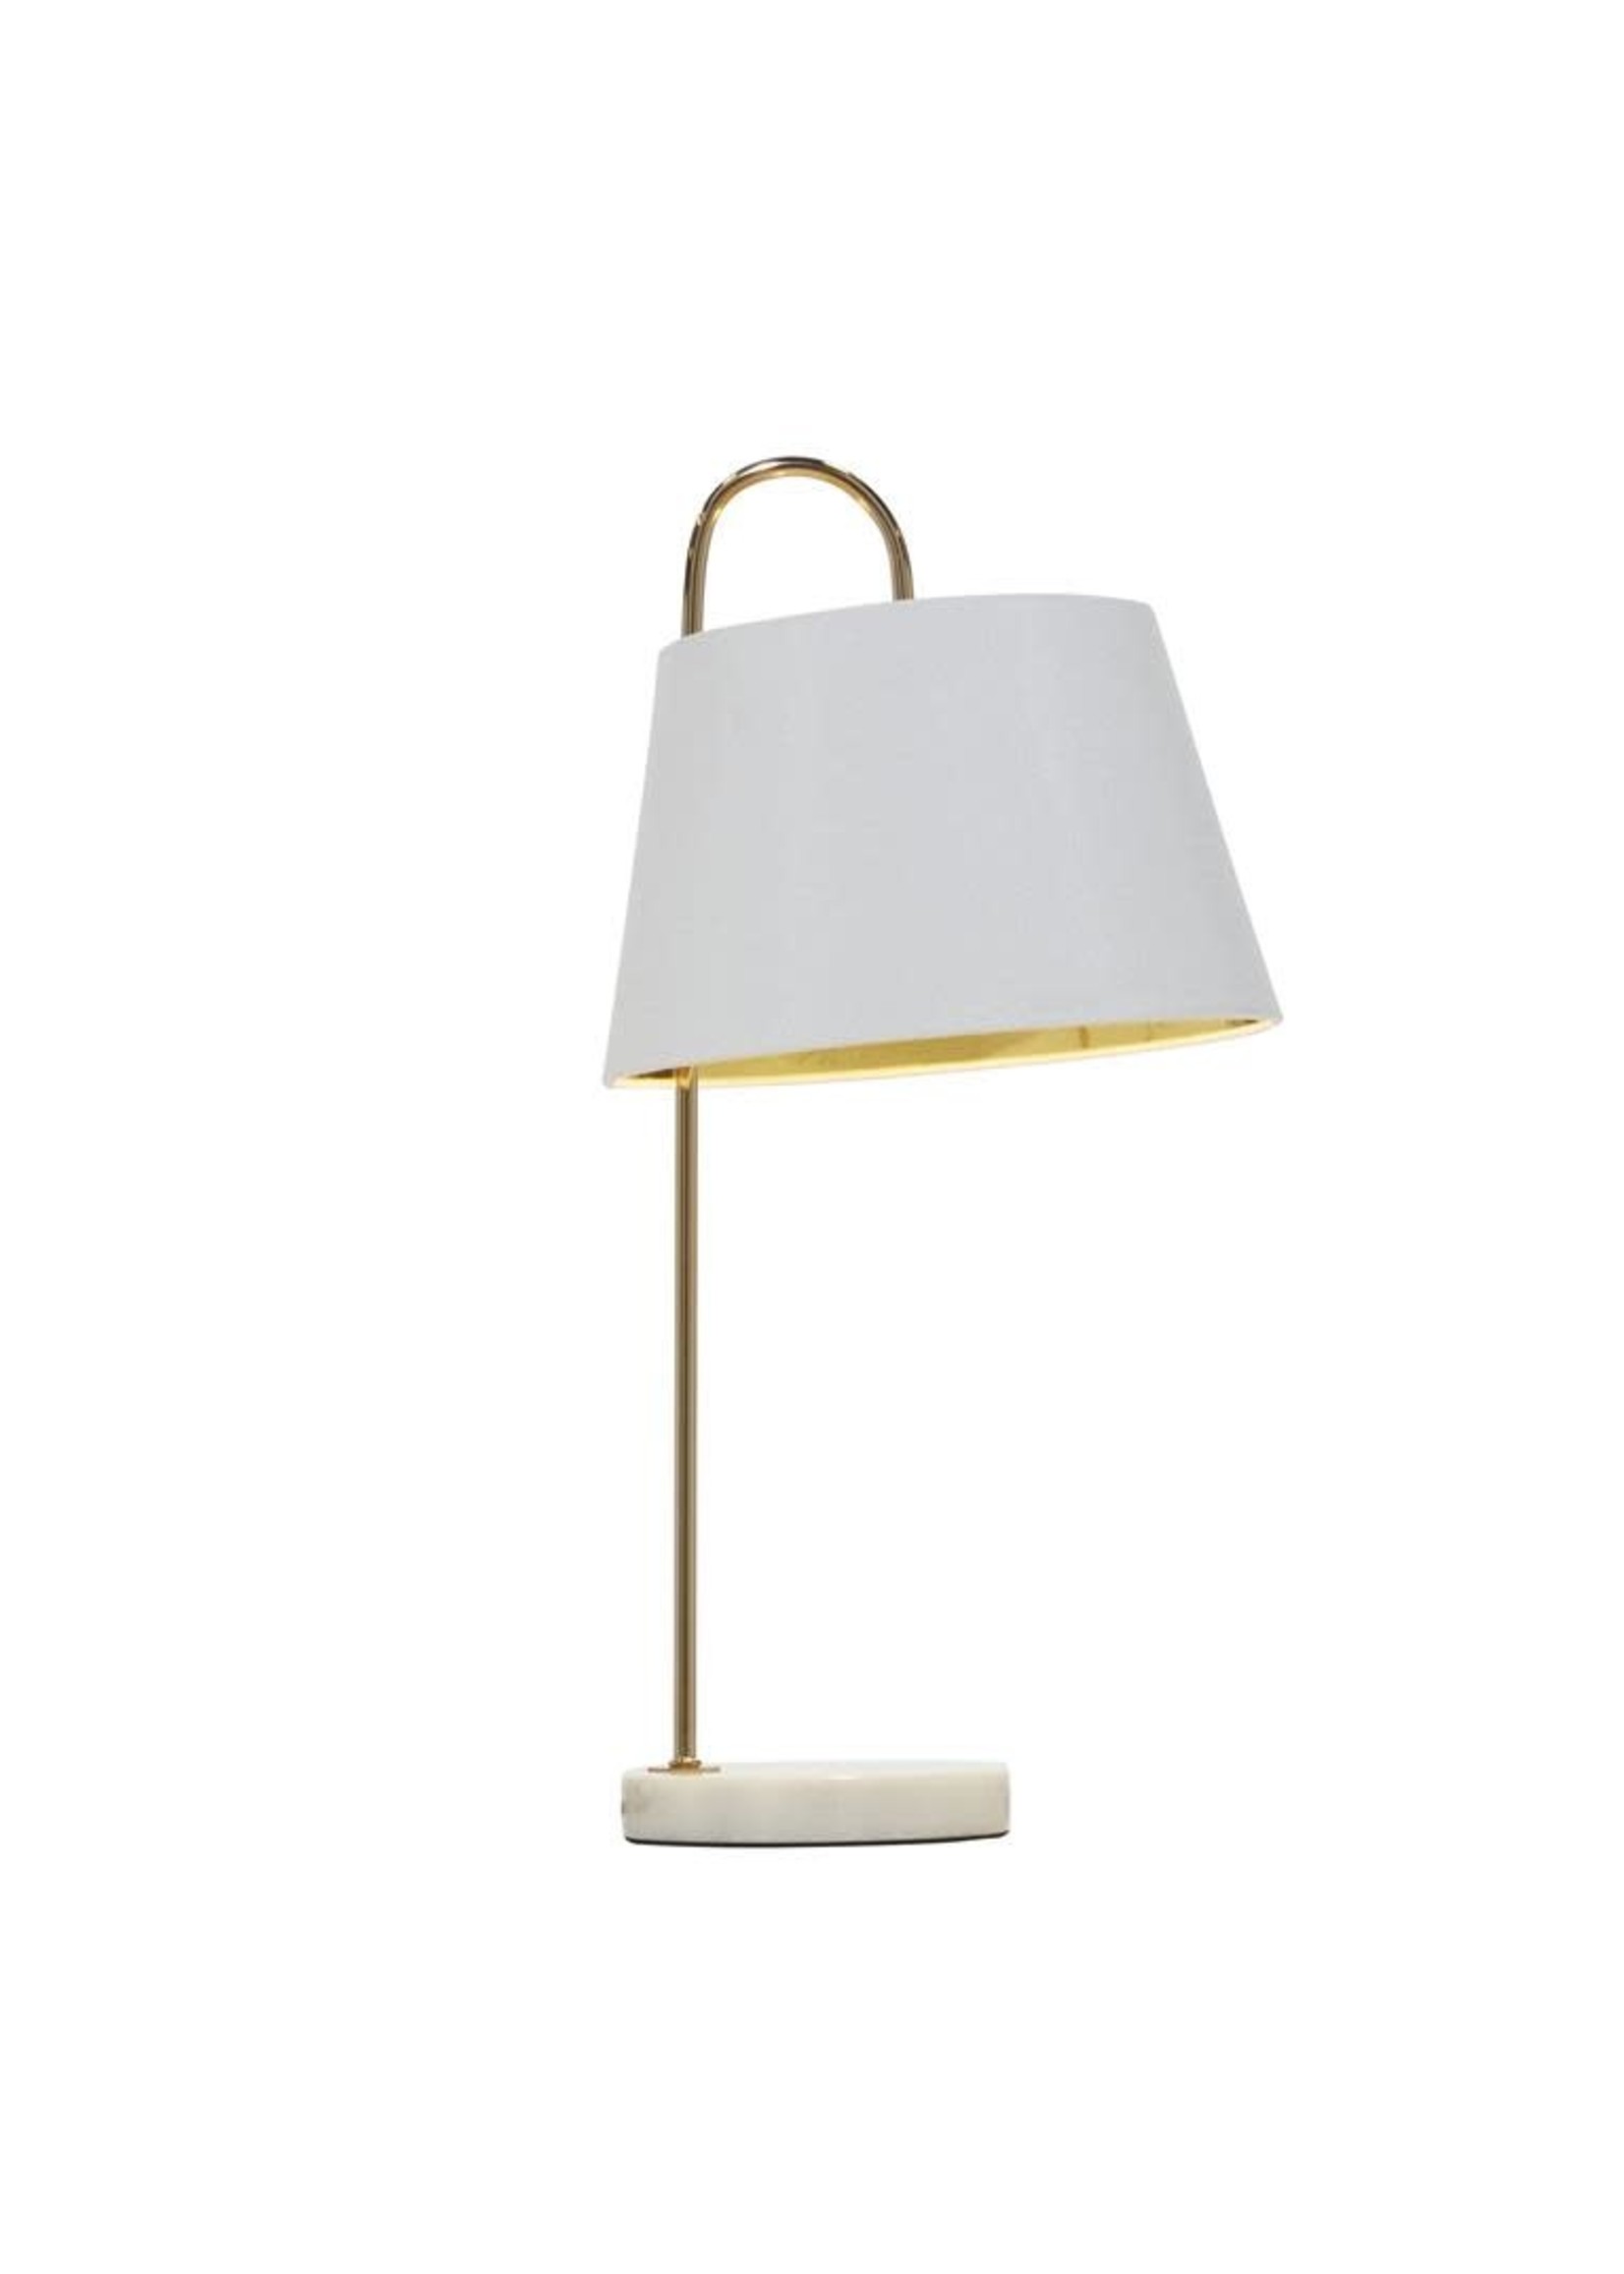 UMA Enterprises 83840 White Metal Modern Table Lamp, 22" x 11" x 11"